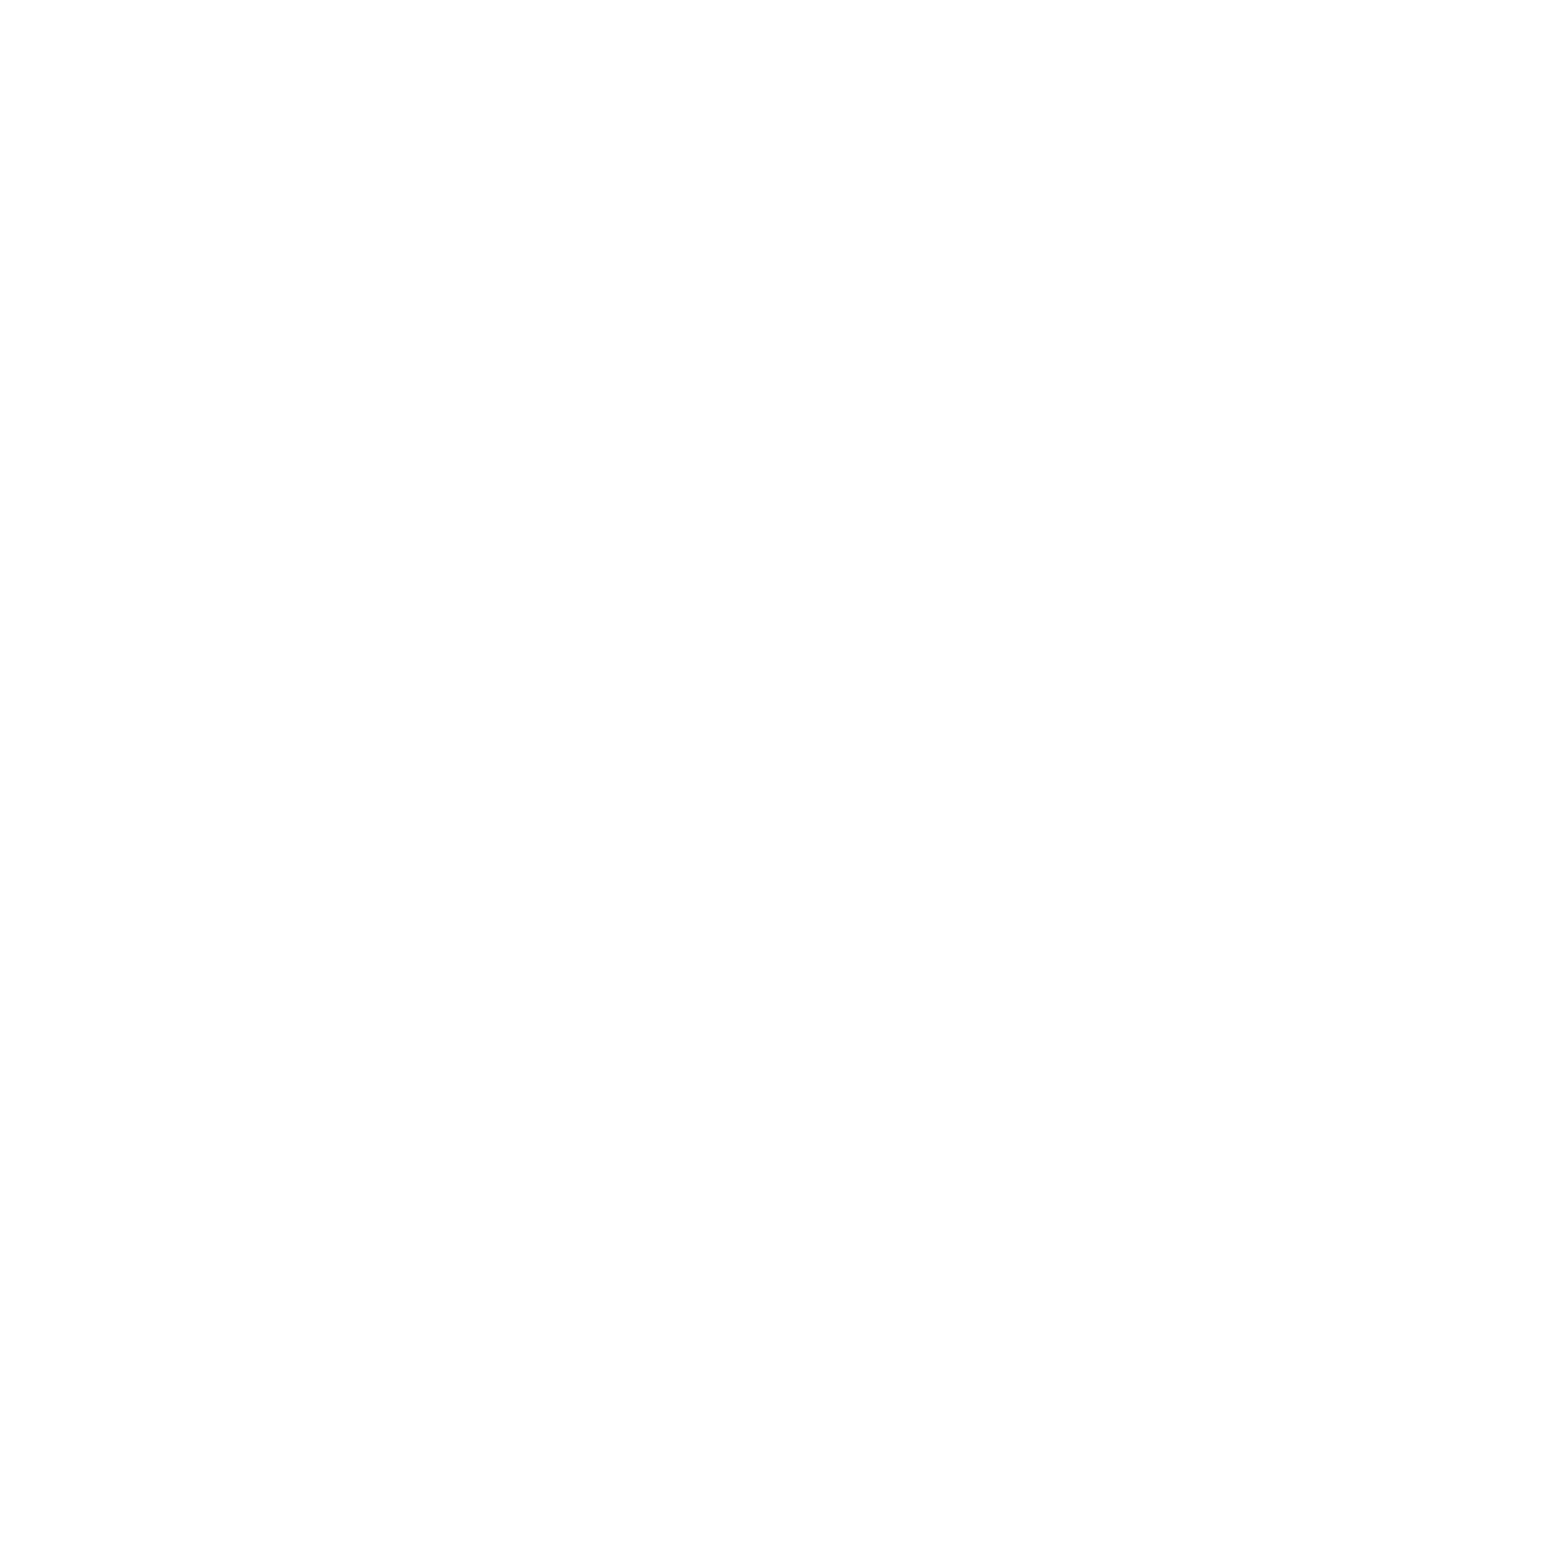 Frontier Communications logo for dark backgrounds (transparent PNG)